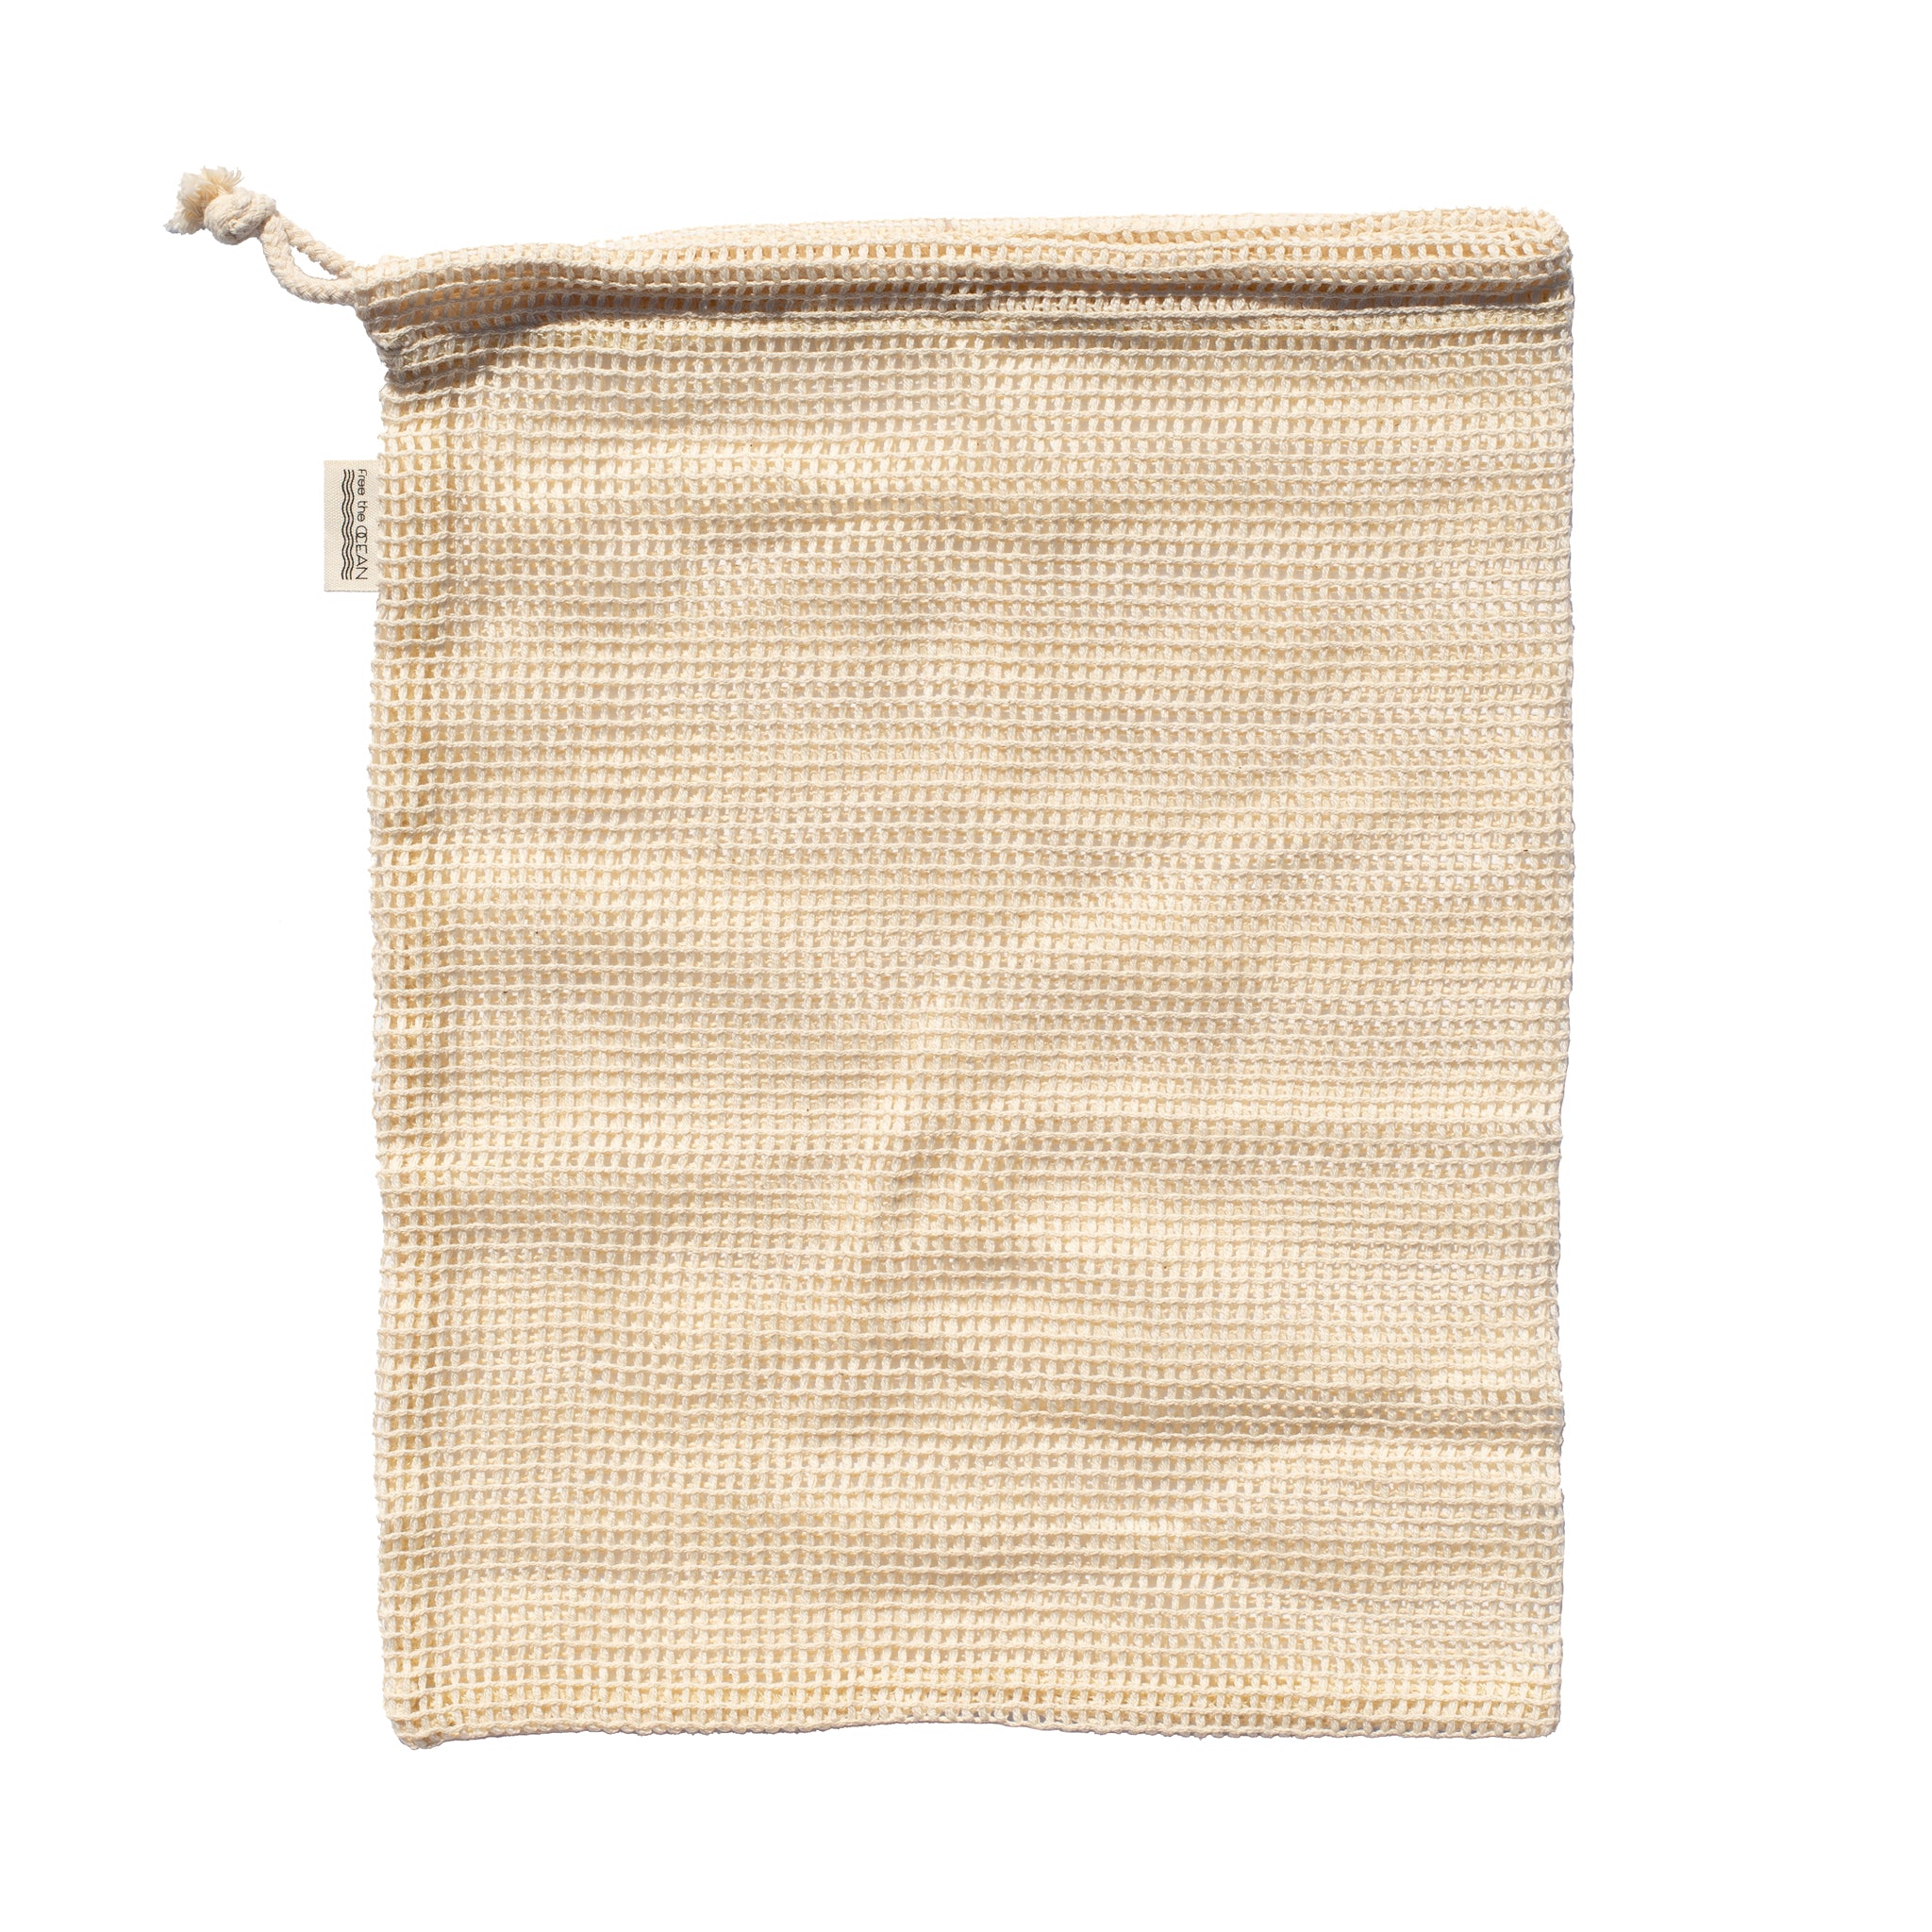 FTO Cotton Mesh Produce Bags - Set of 3